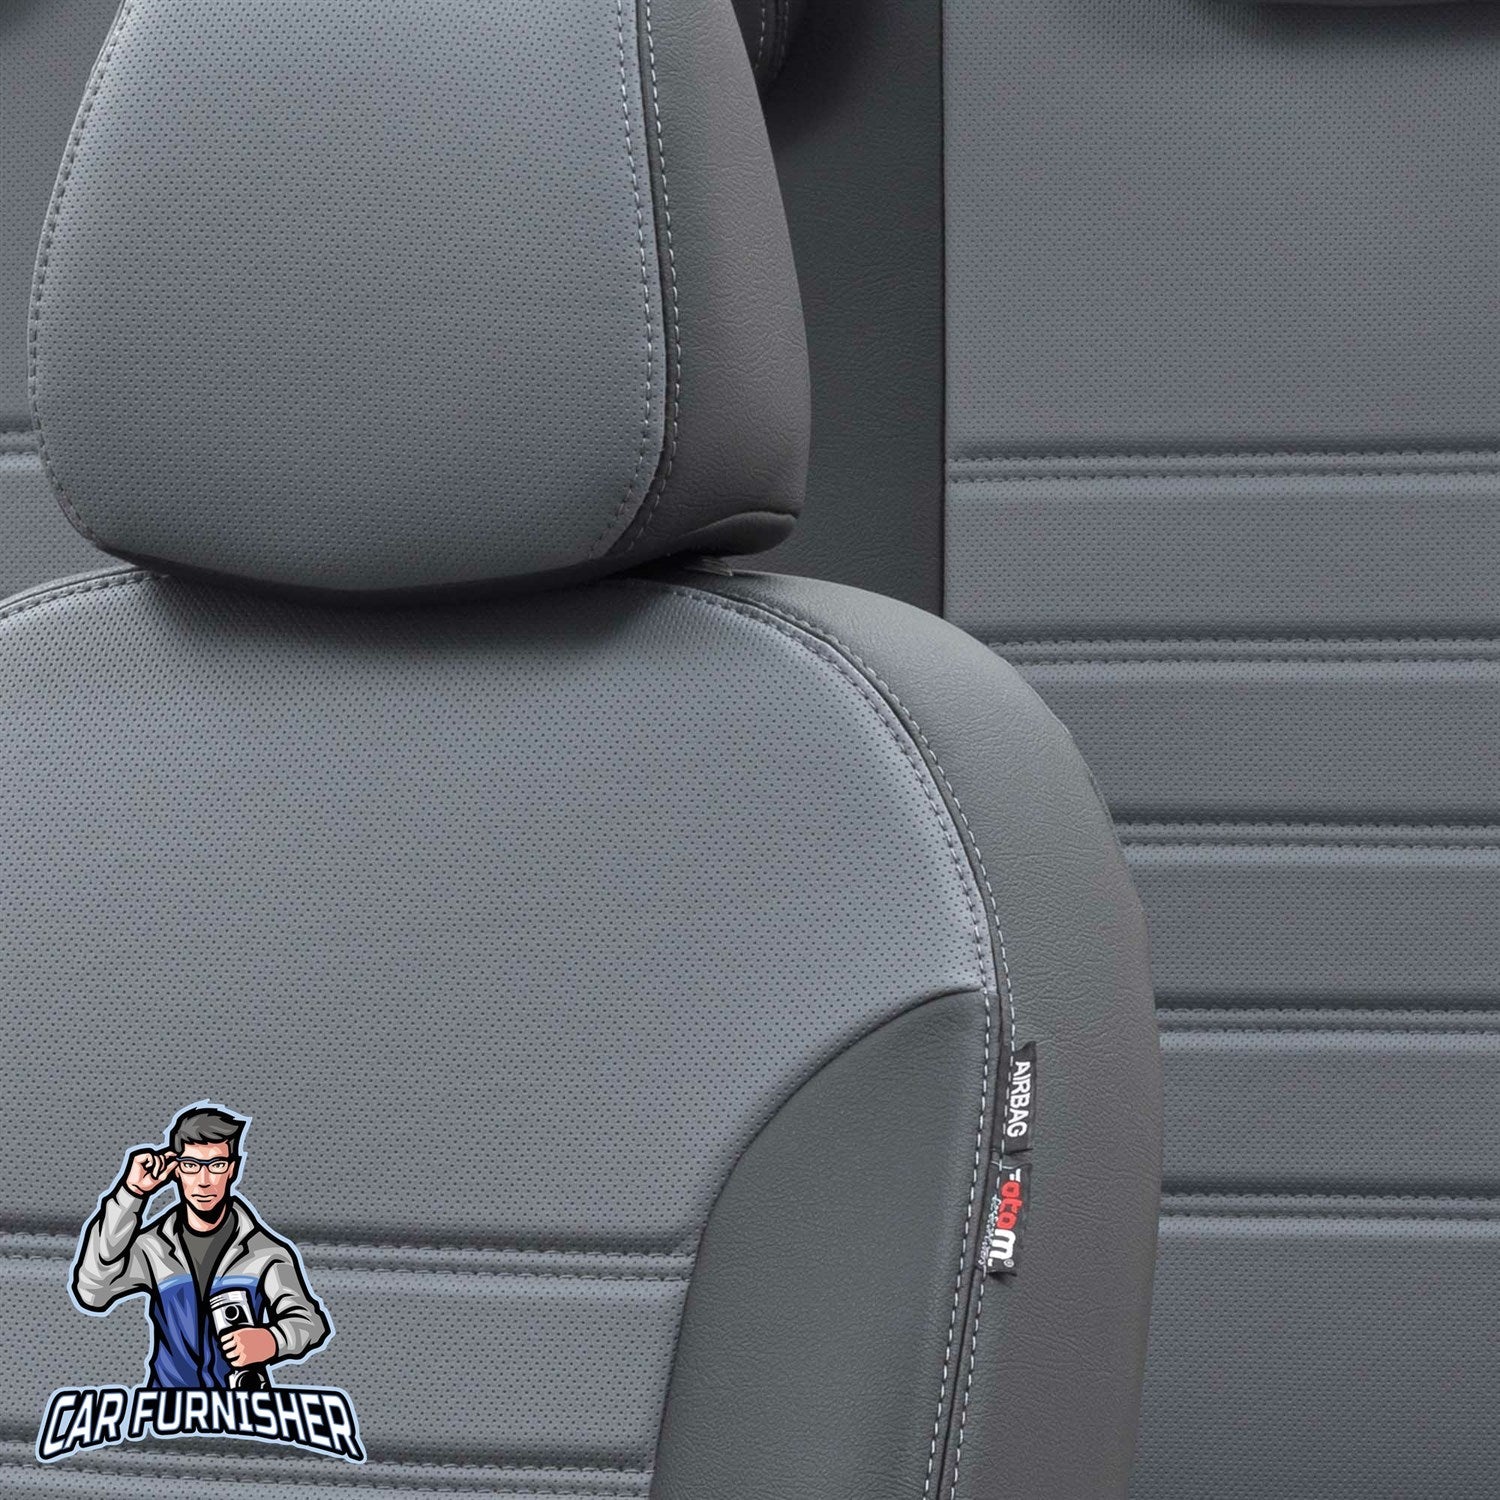 Kia Stonic Seat Covers Istanbul Leather Design Smoked Black Leather